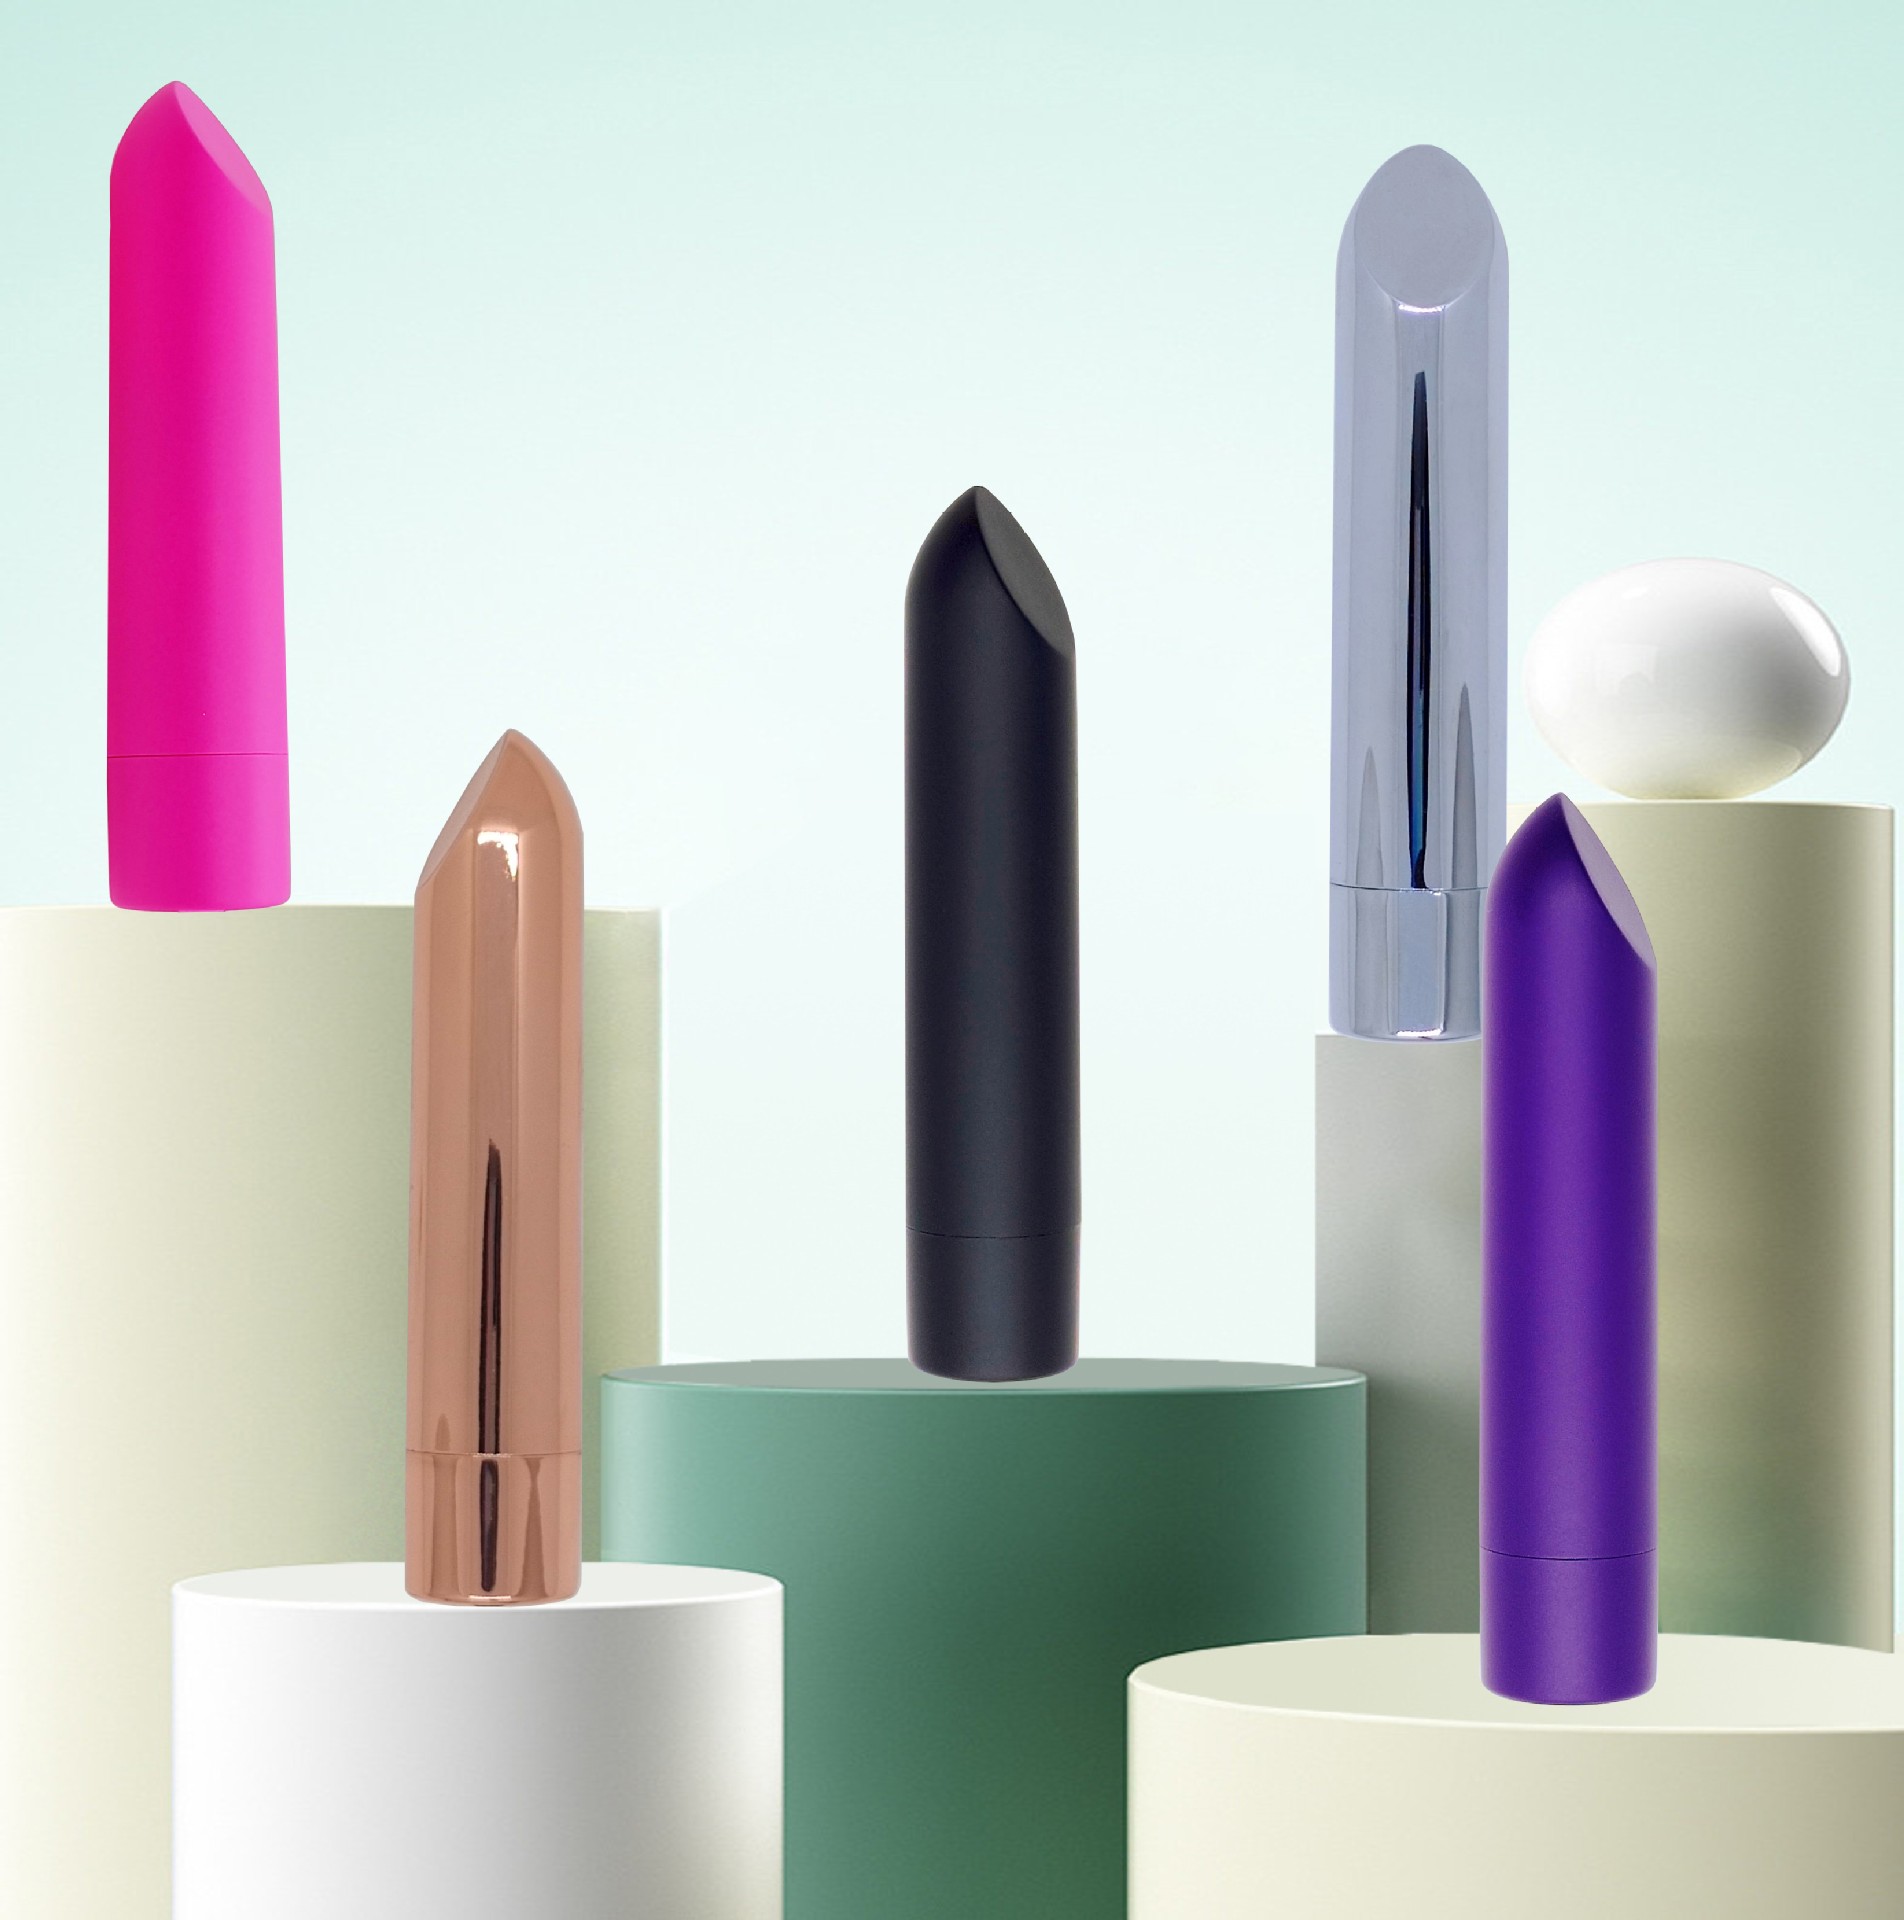 DzeBonde Toys Mini Red Lipstick Vibrators Toys for Woman Featured Image